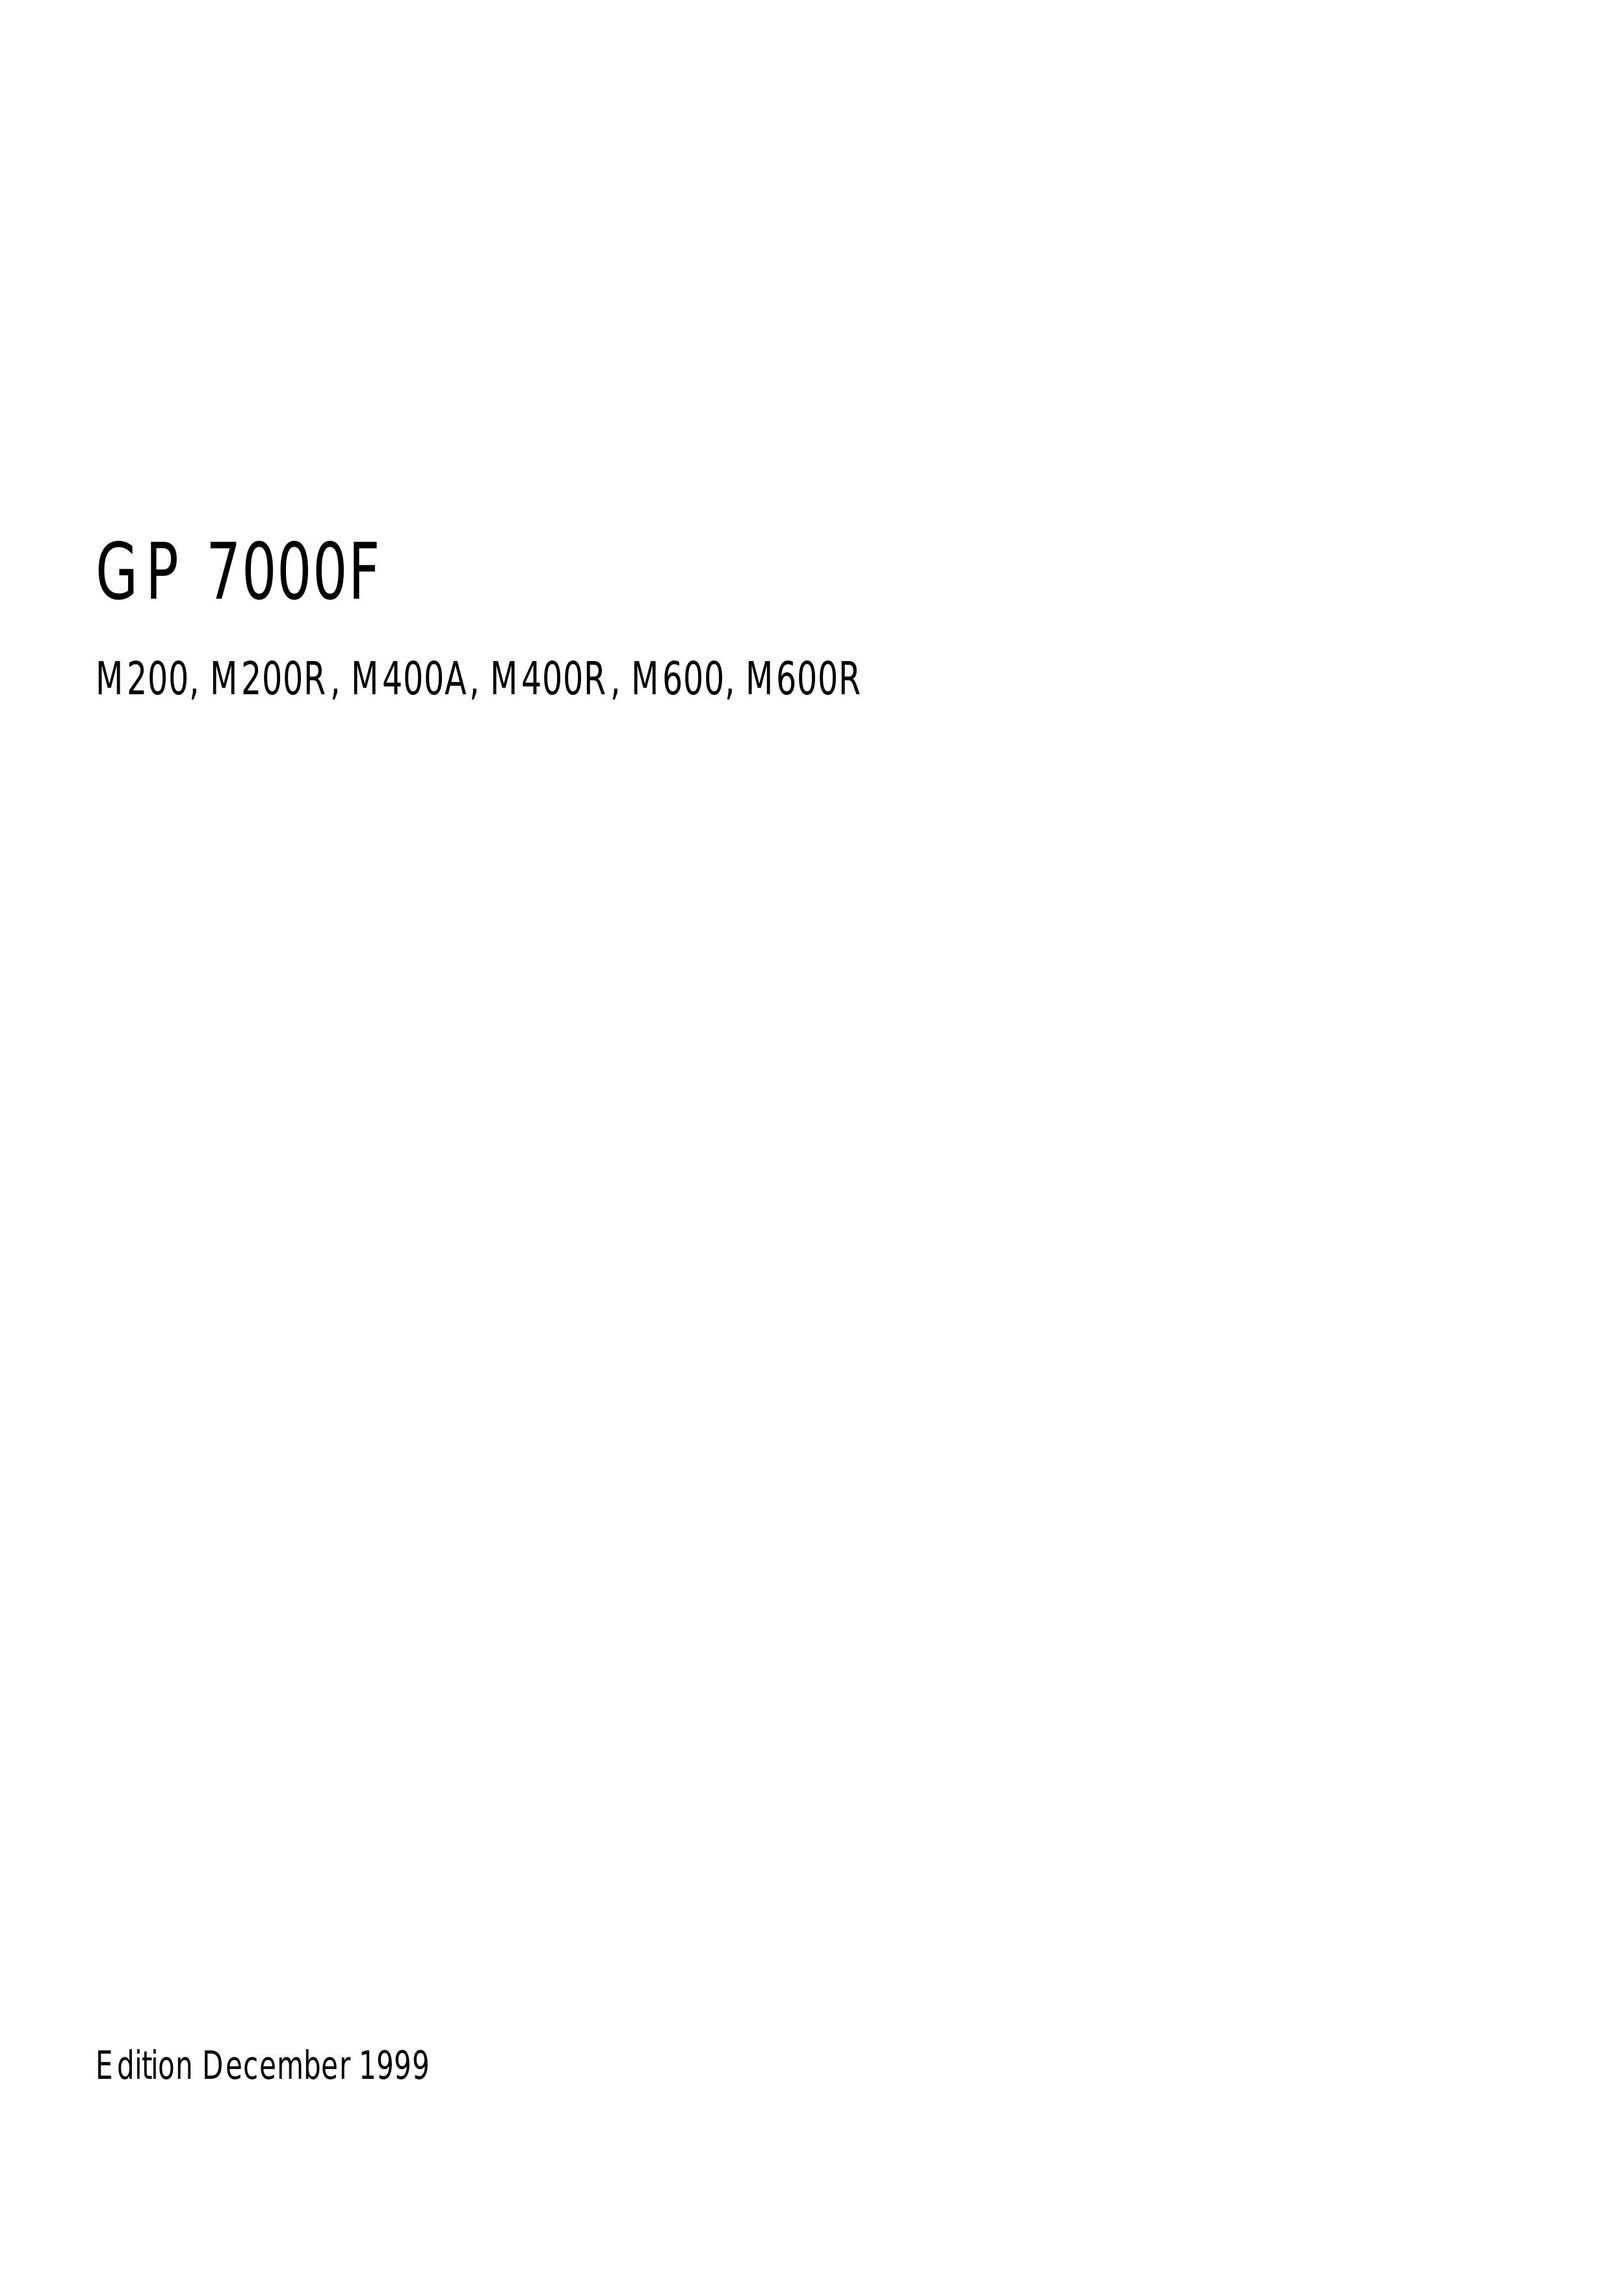 Fujitsu M200 Computer Hardware User Manual